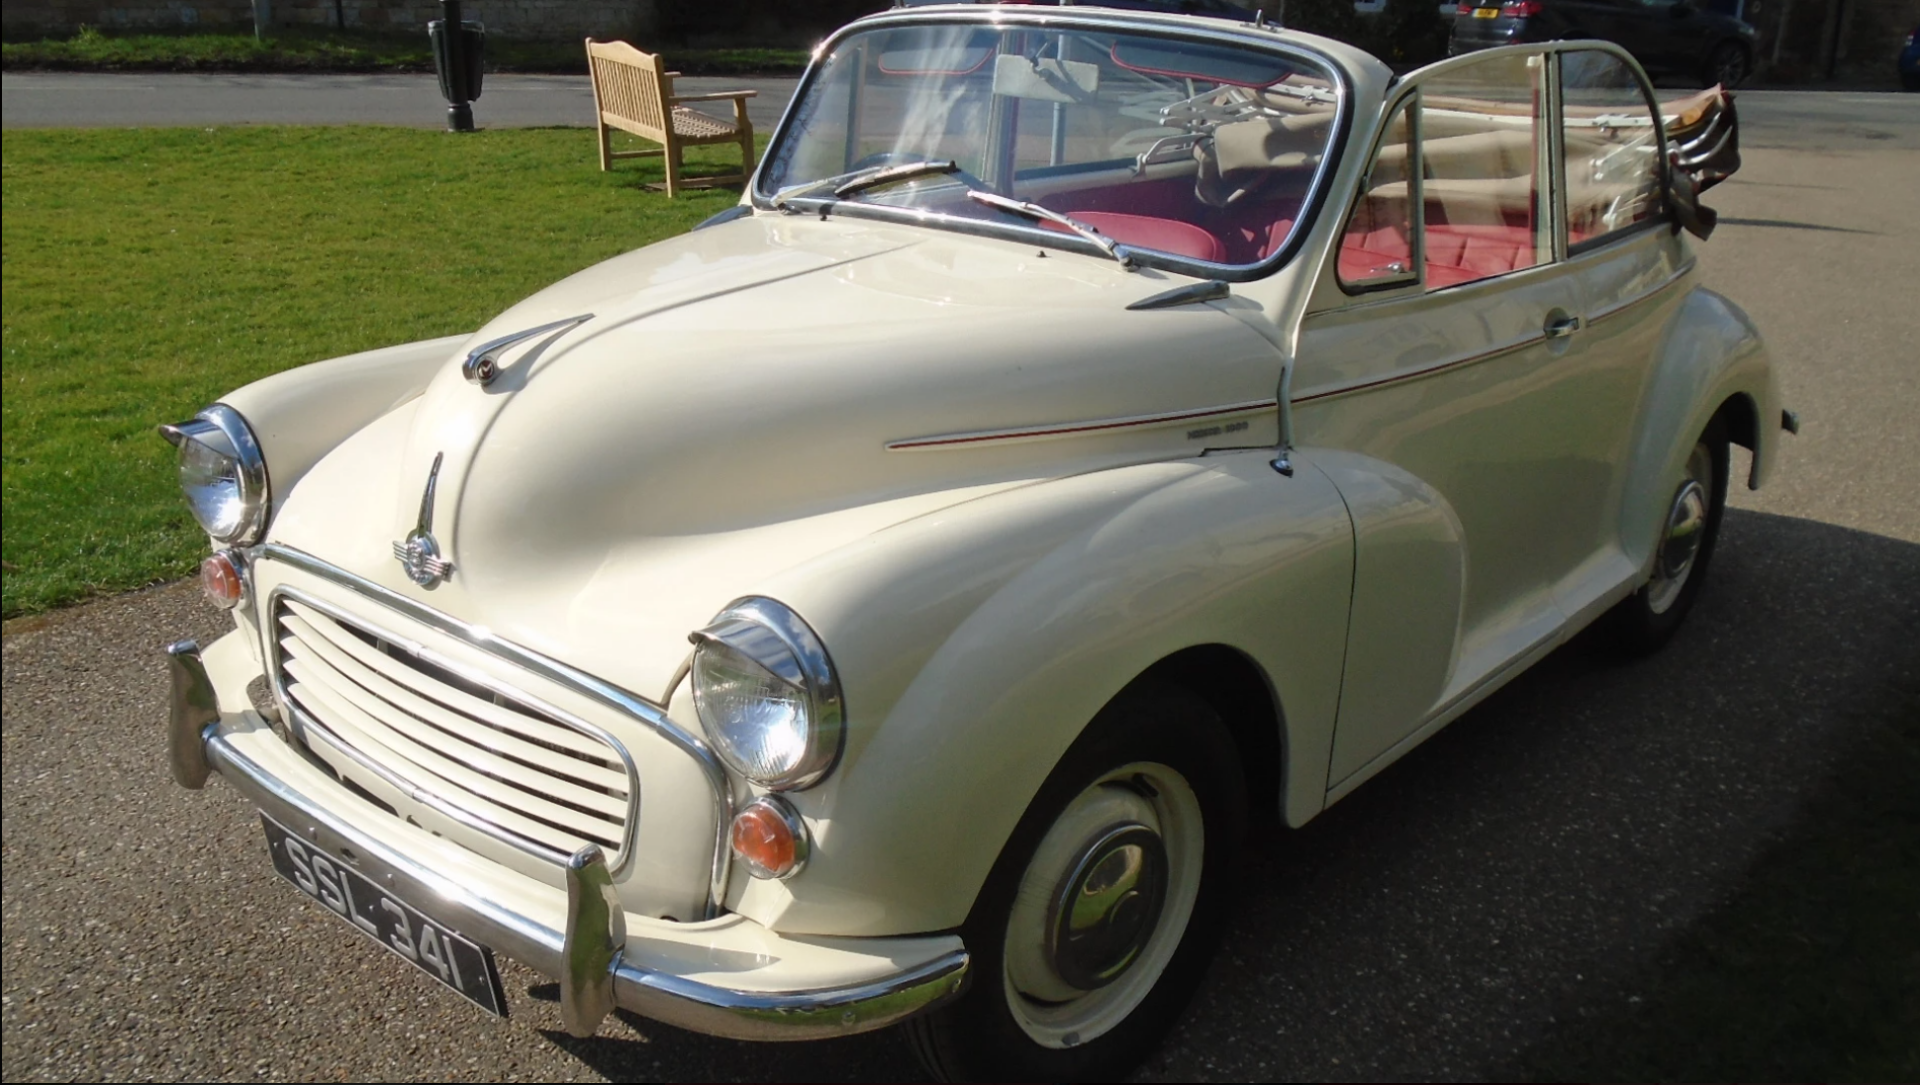 1962 Morris Minor Convertible 998cc - Image 5 of 6